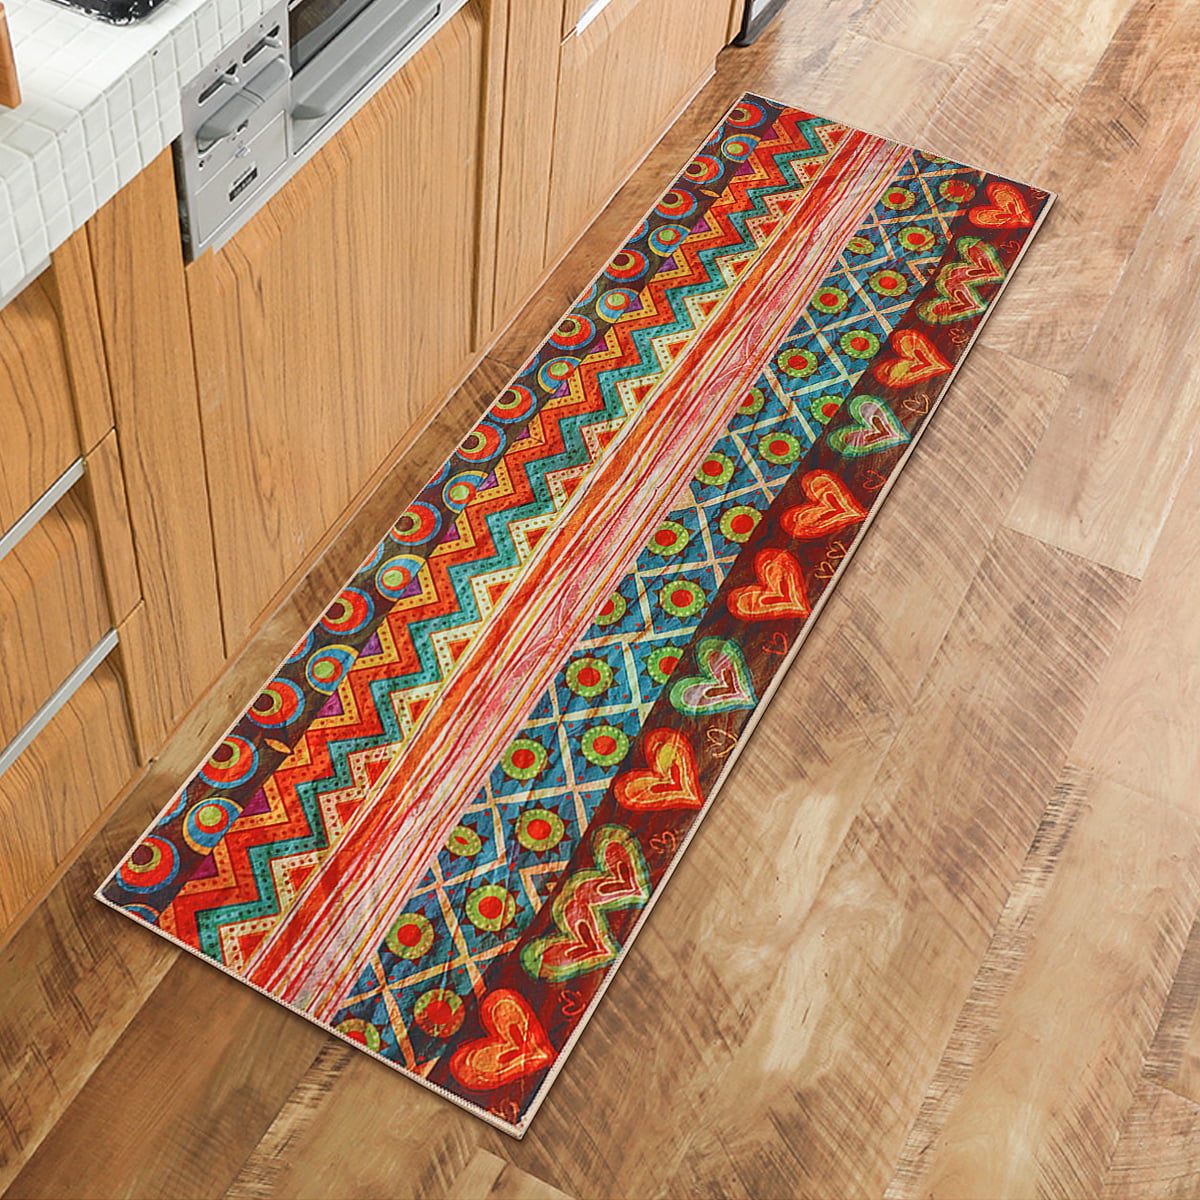 Non-slip Floor Mat Rugs Home Kitchen Bathroom Door Entrance Carpet Bohemian 